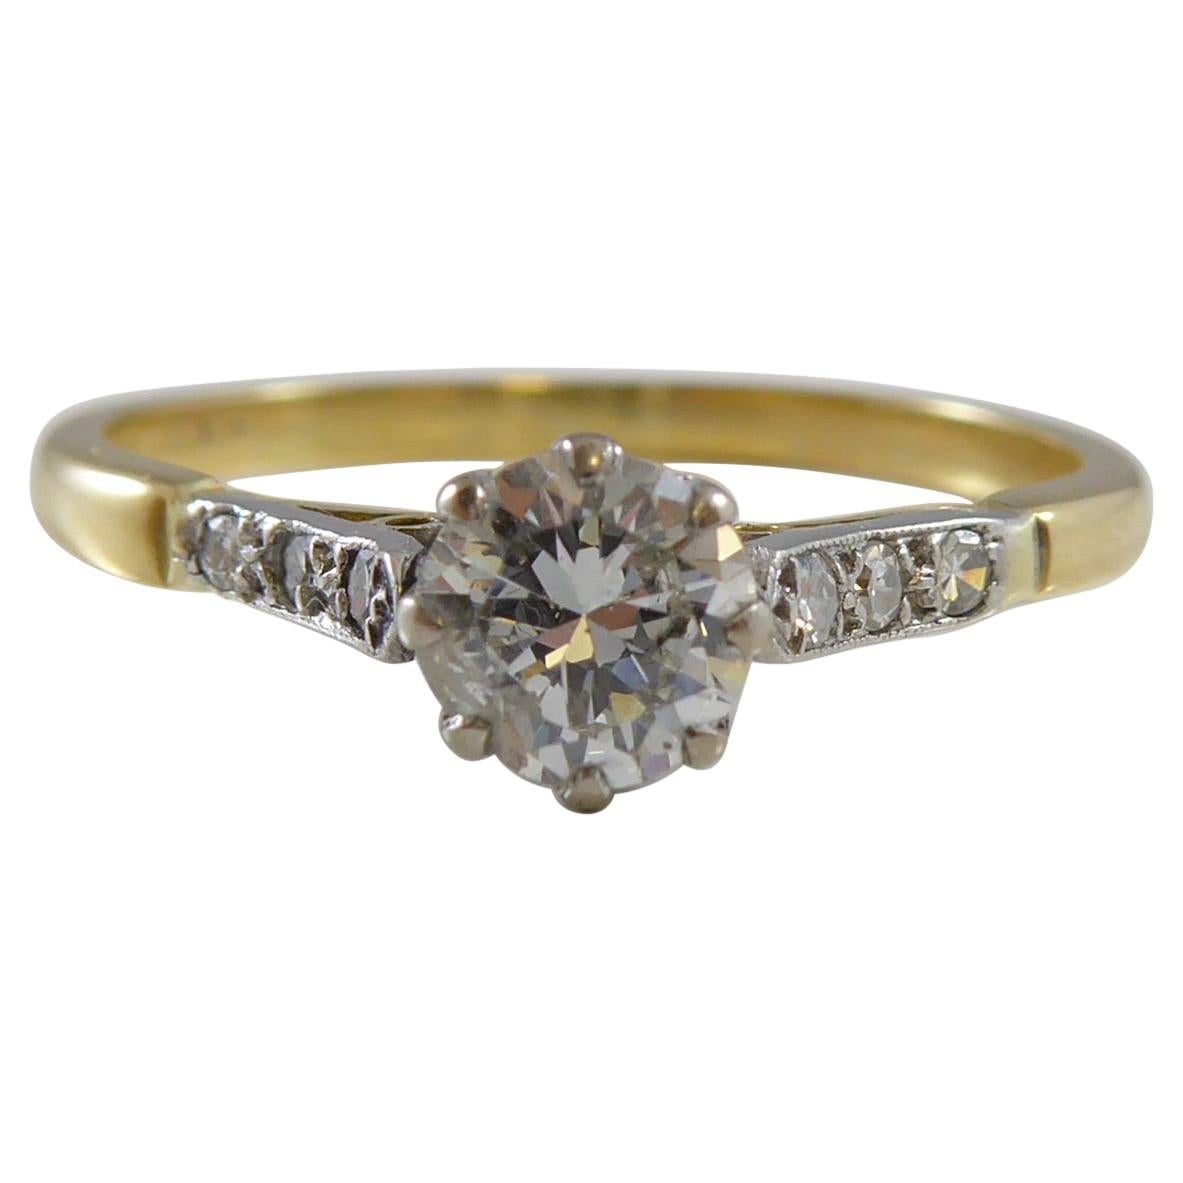 Vintage Solitaire Diamond Engagement Ring, Circa 1950s/1960s